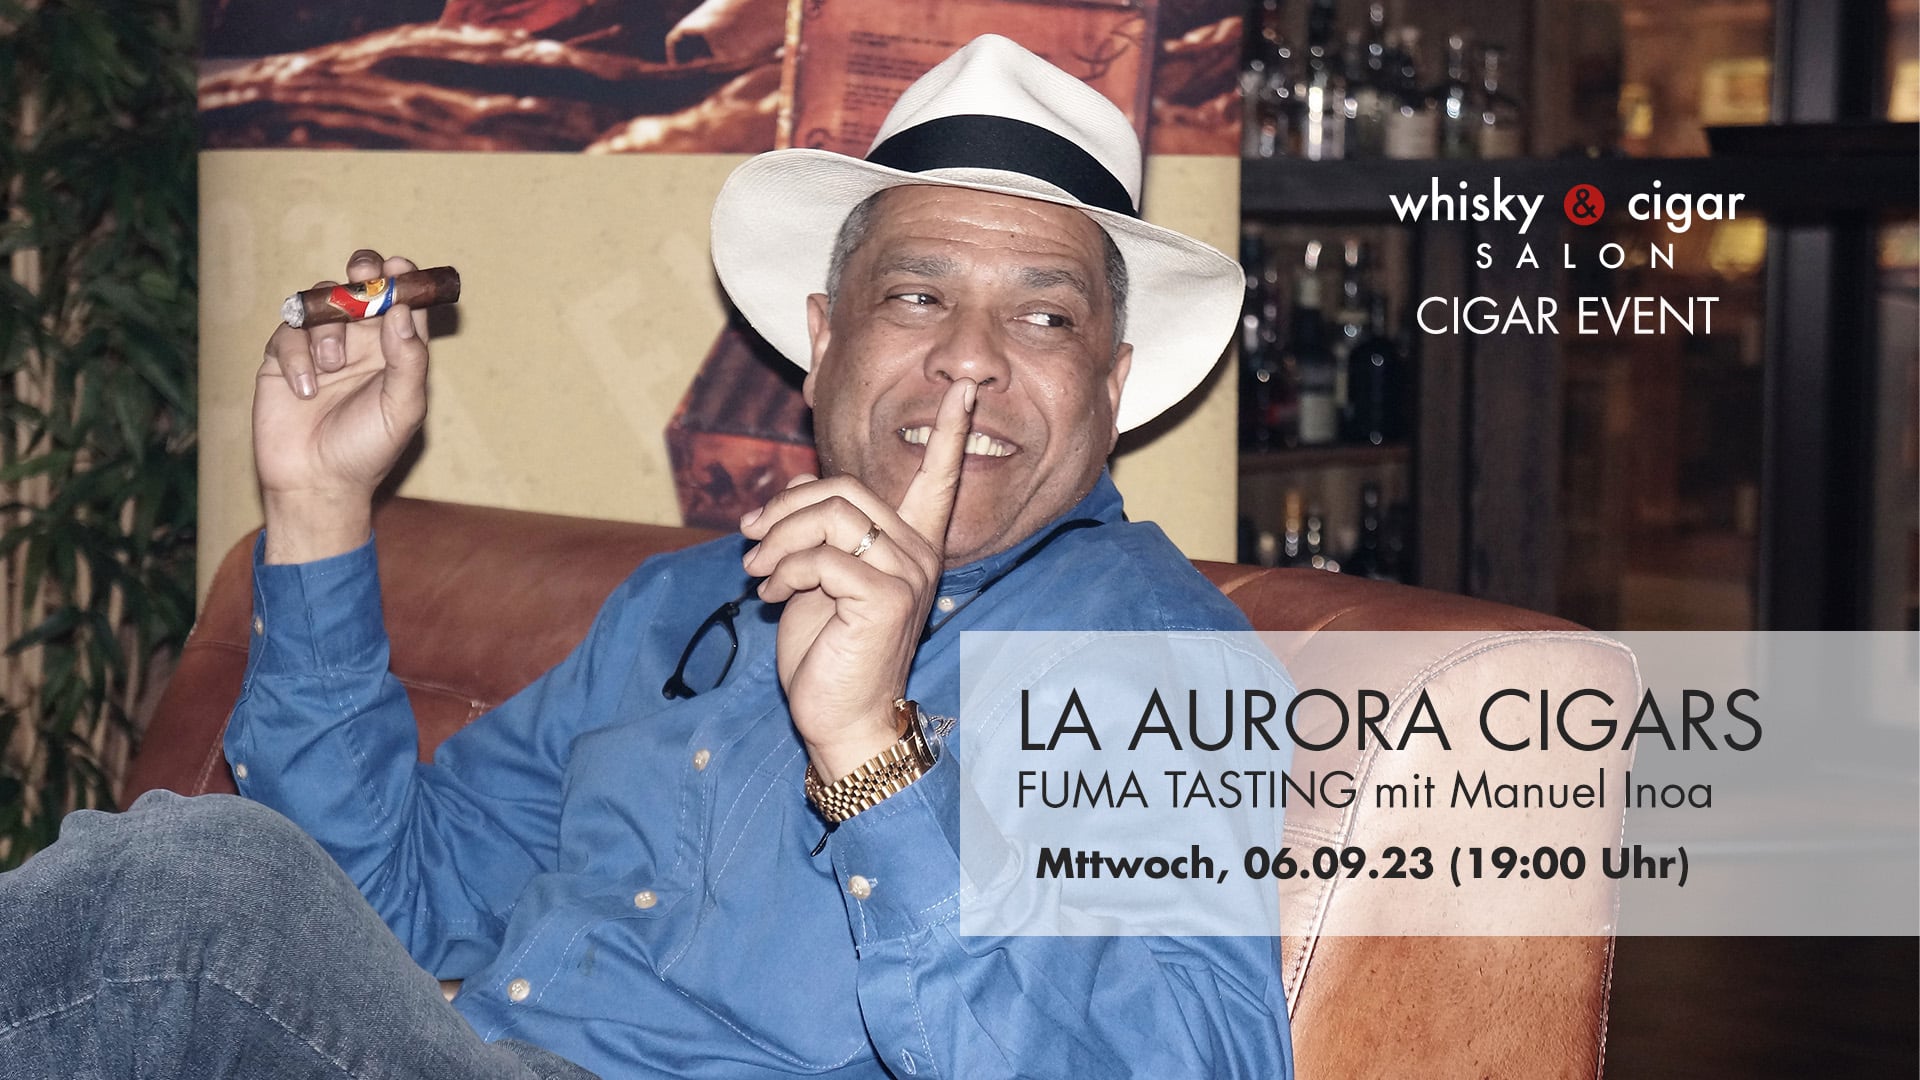 Zigarren-Event: La Aurora Fuma Tasting mit Manuel Inoa im whisky & cigar salon.